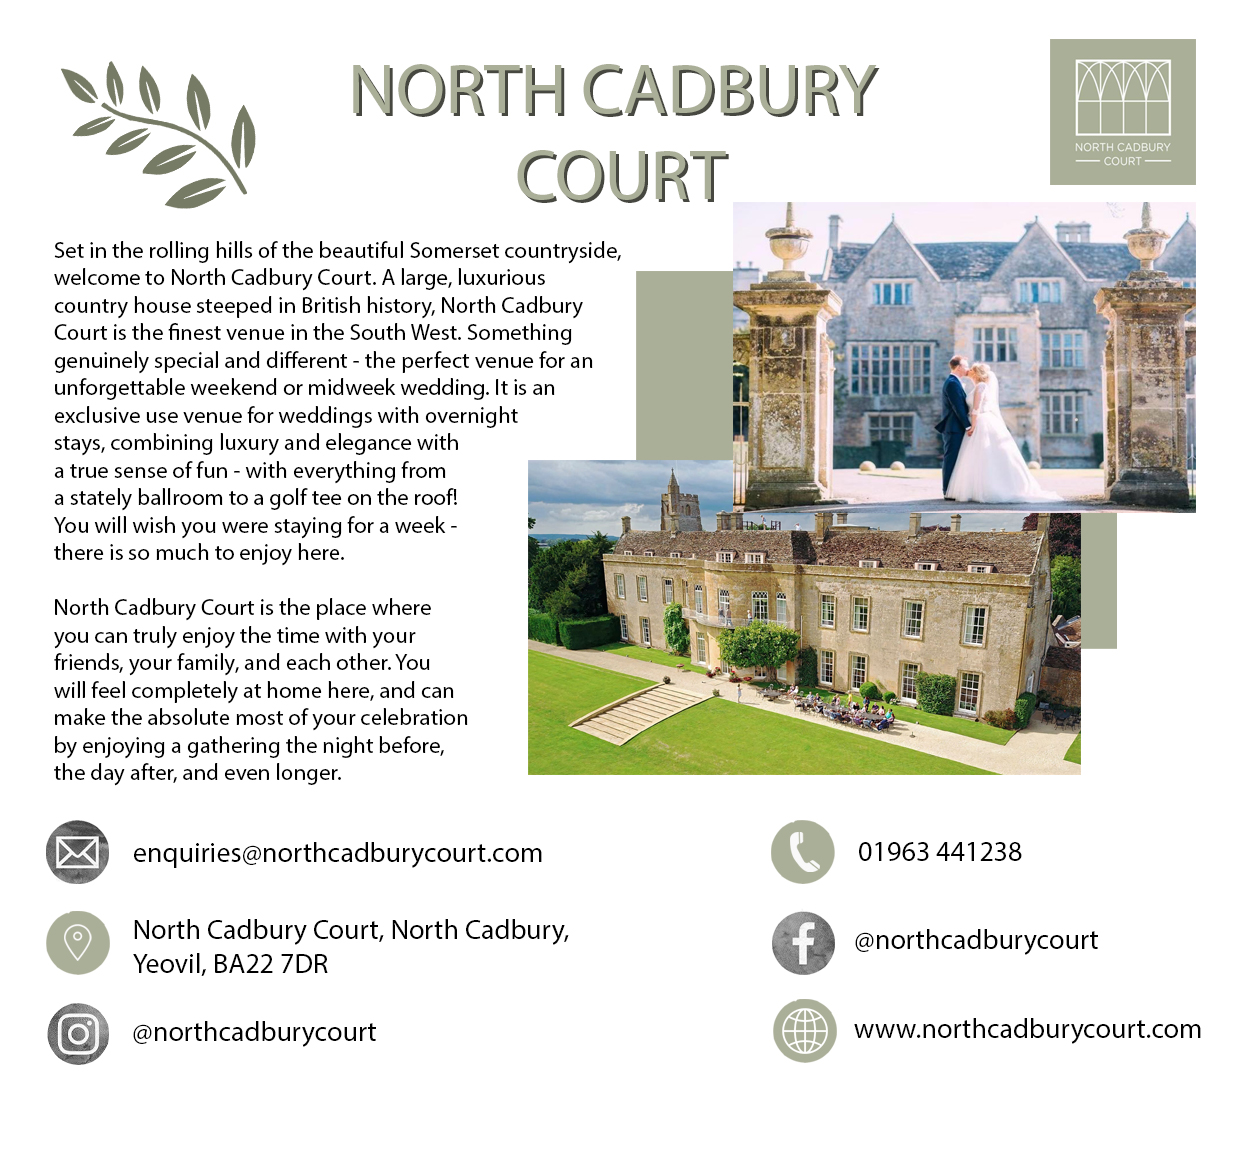 North Cadbury Court